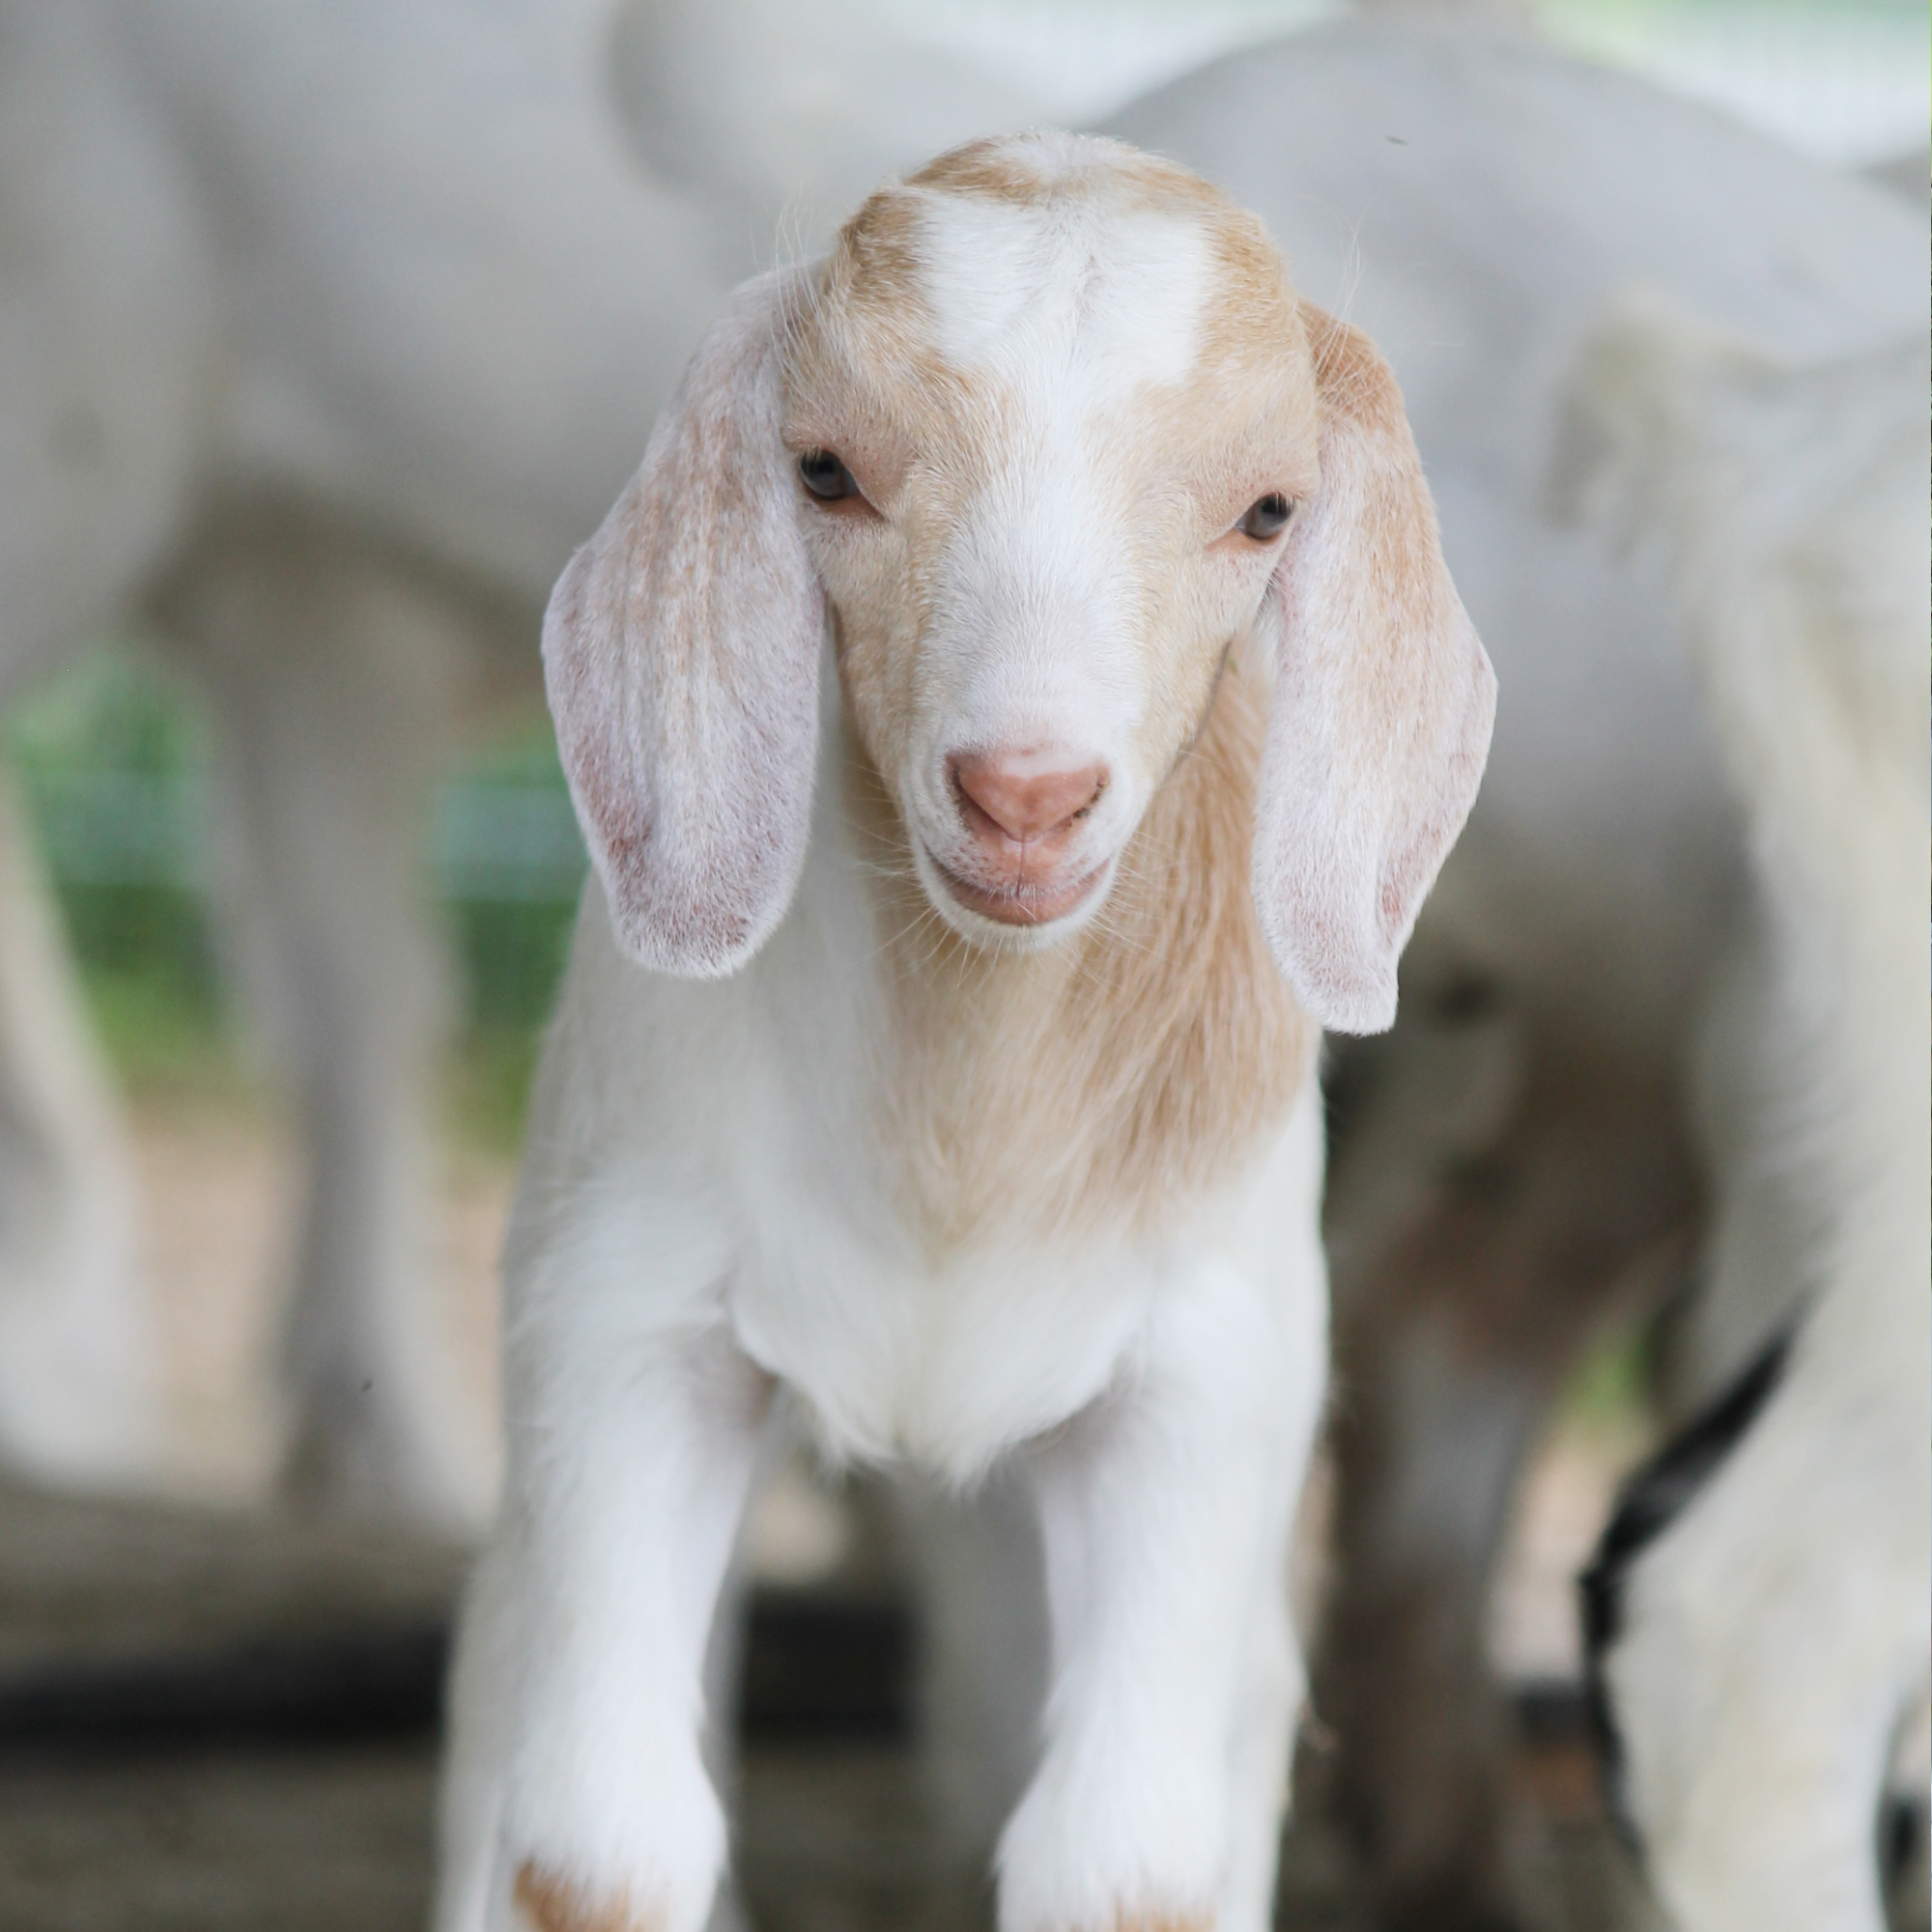 SPCA Operation Baby Goat